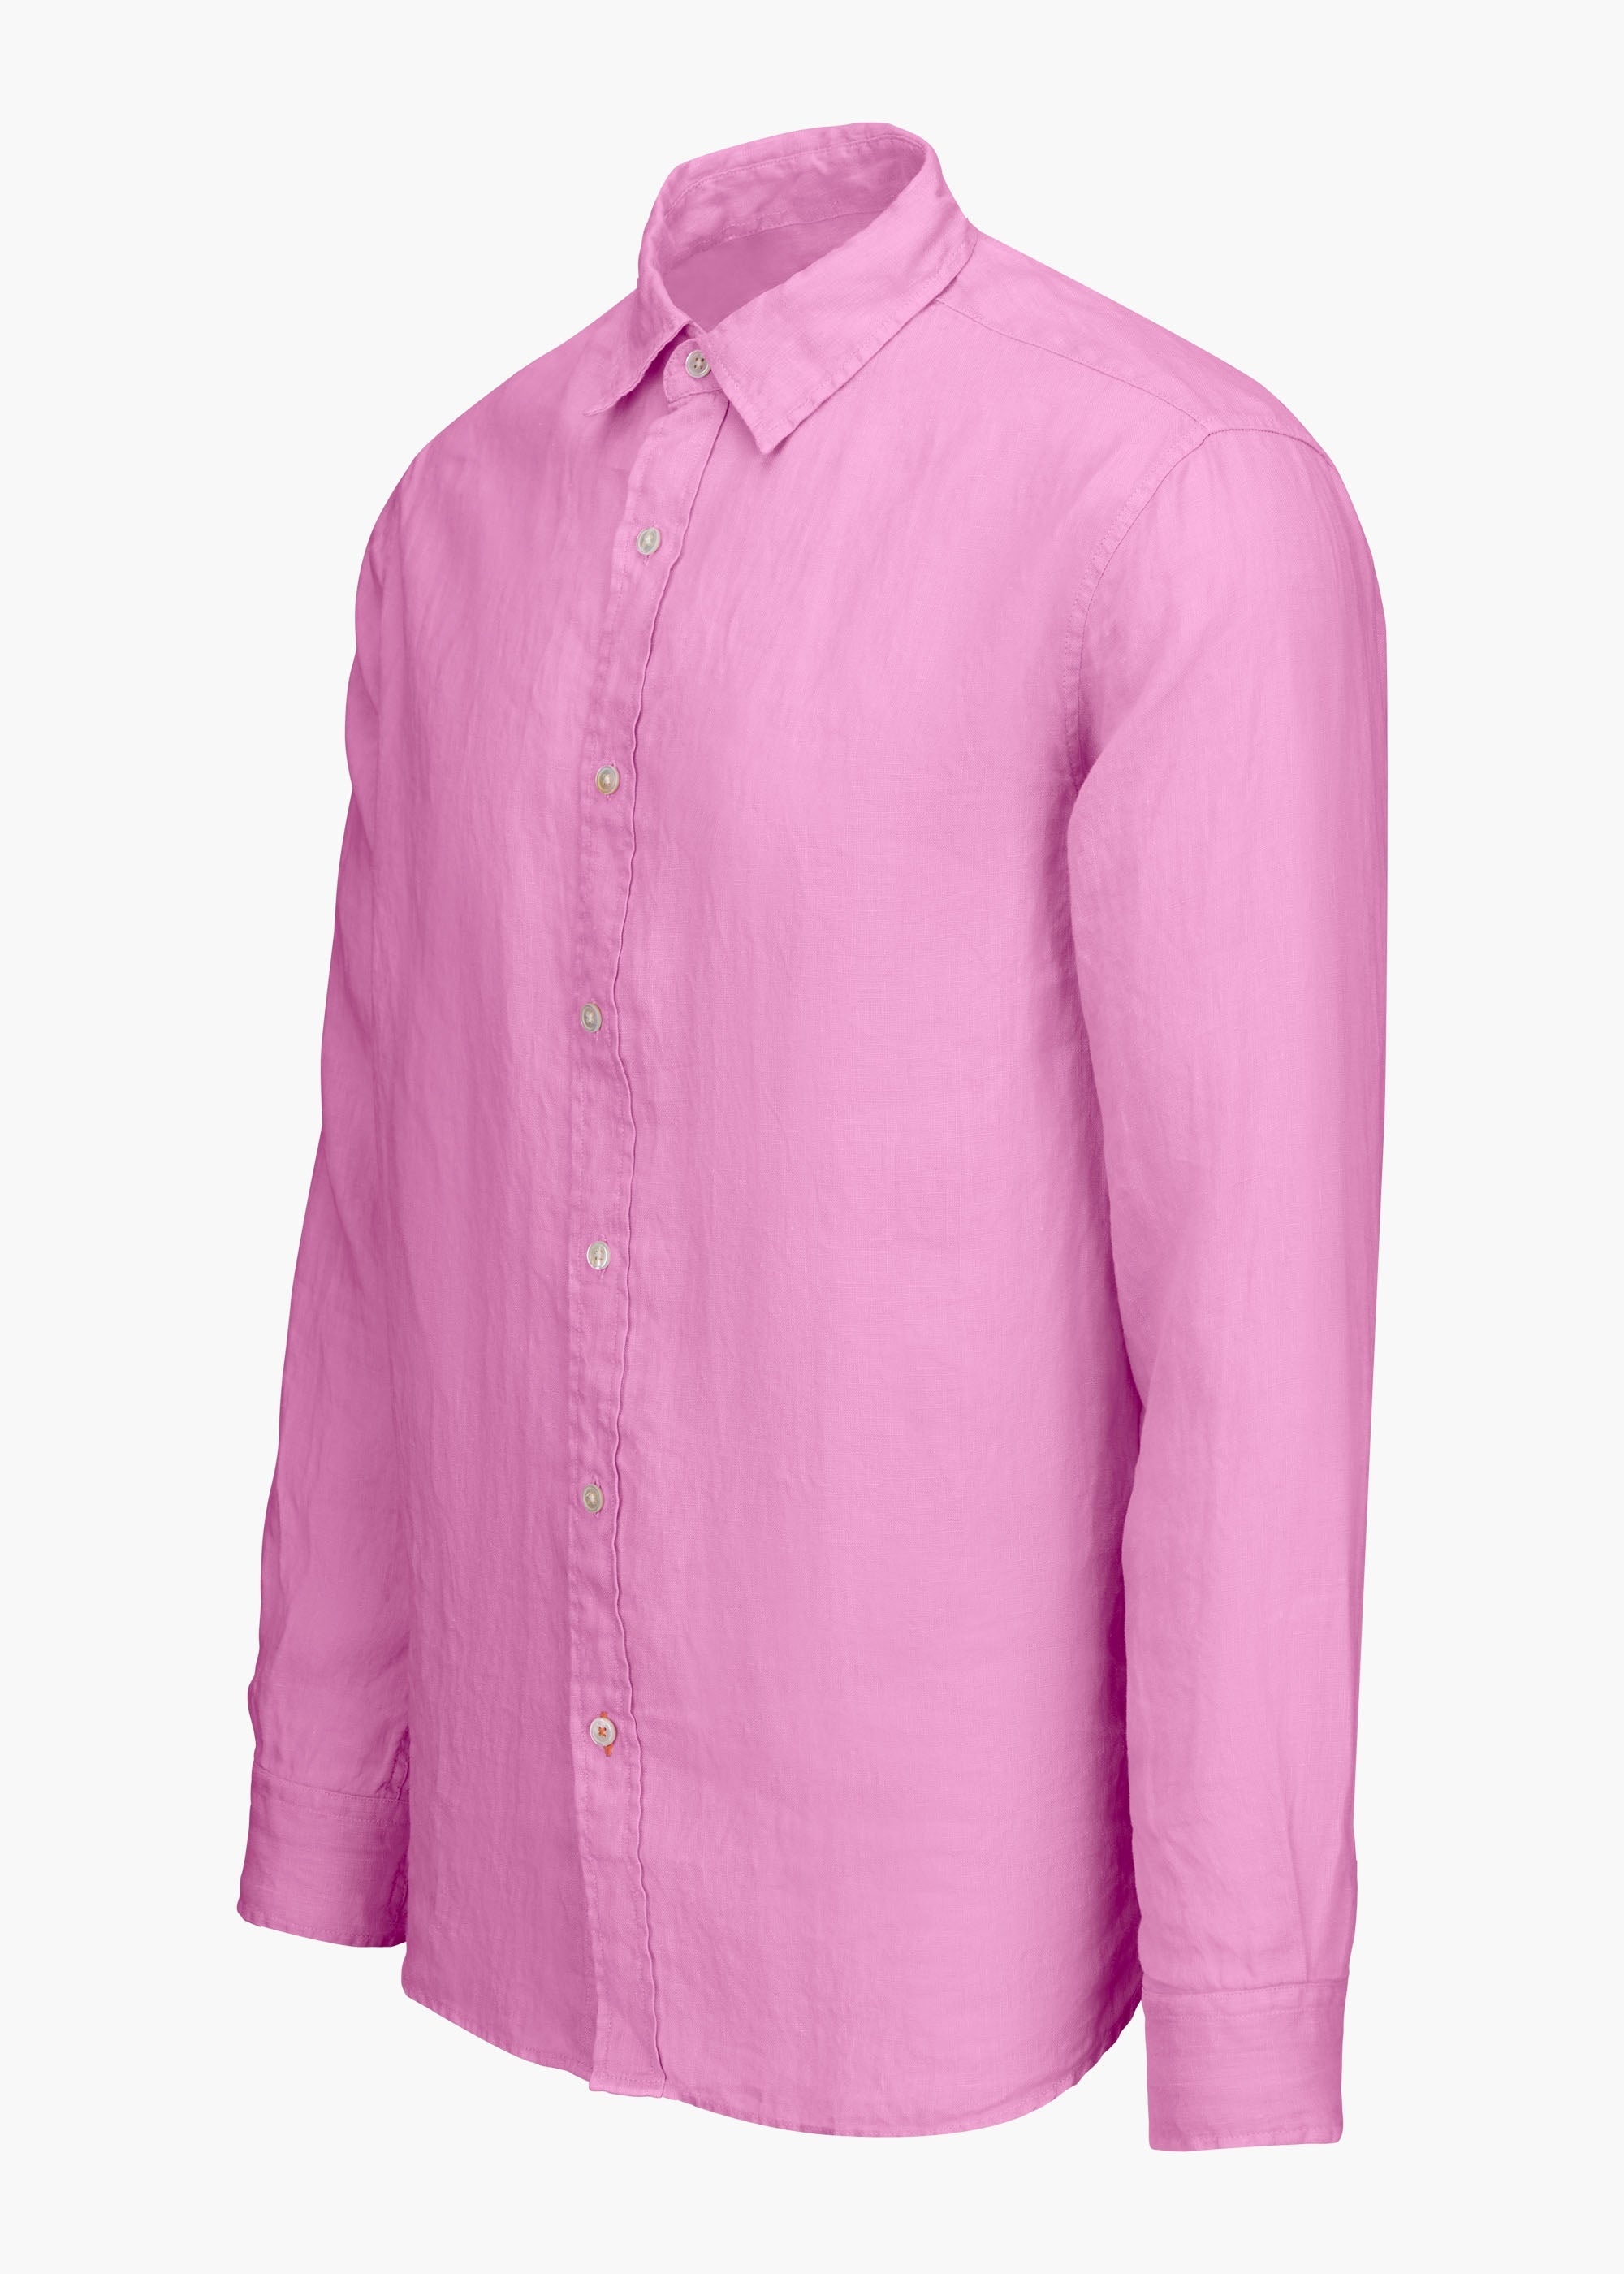 Amalfi Linen Shirt - background::white,variant::Orchid